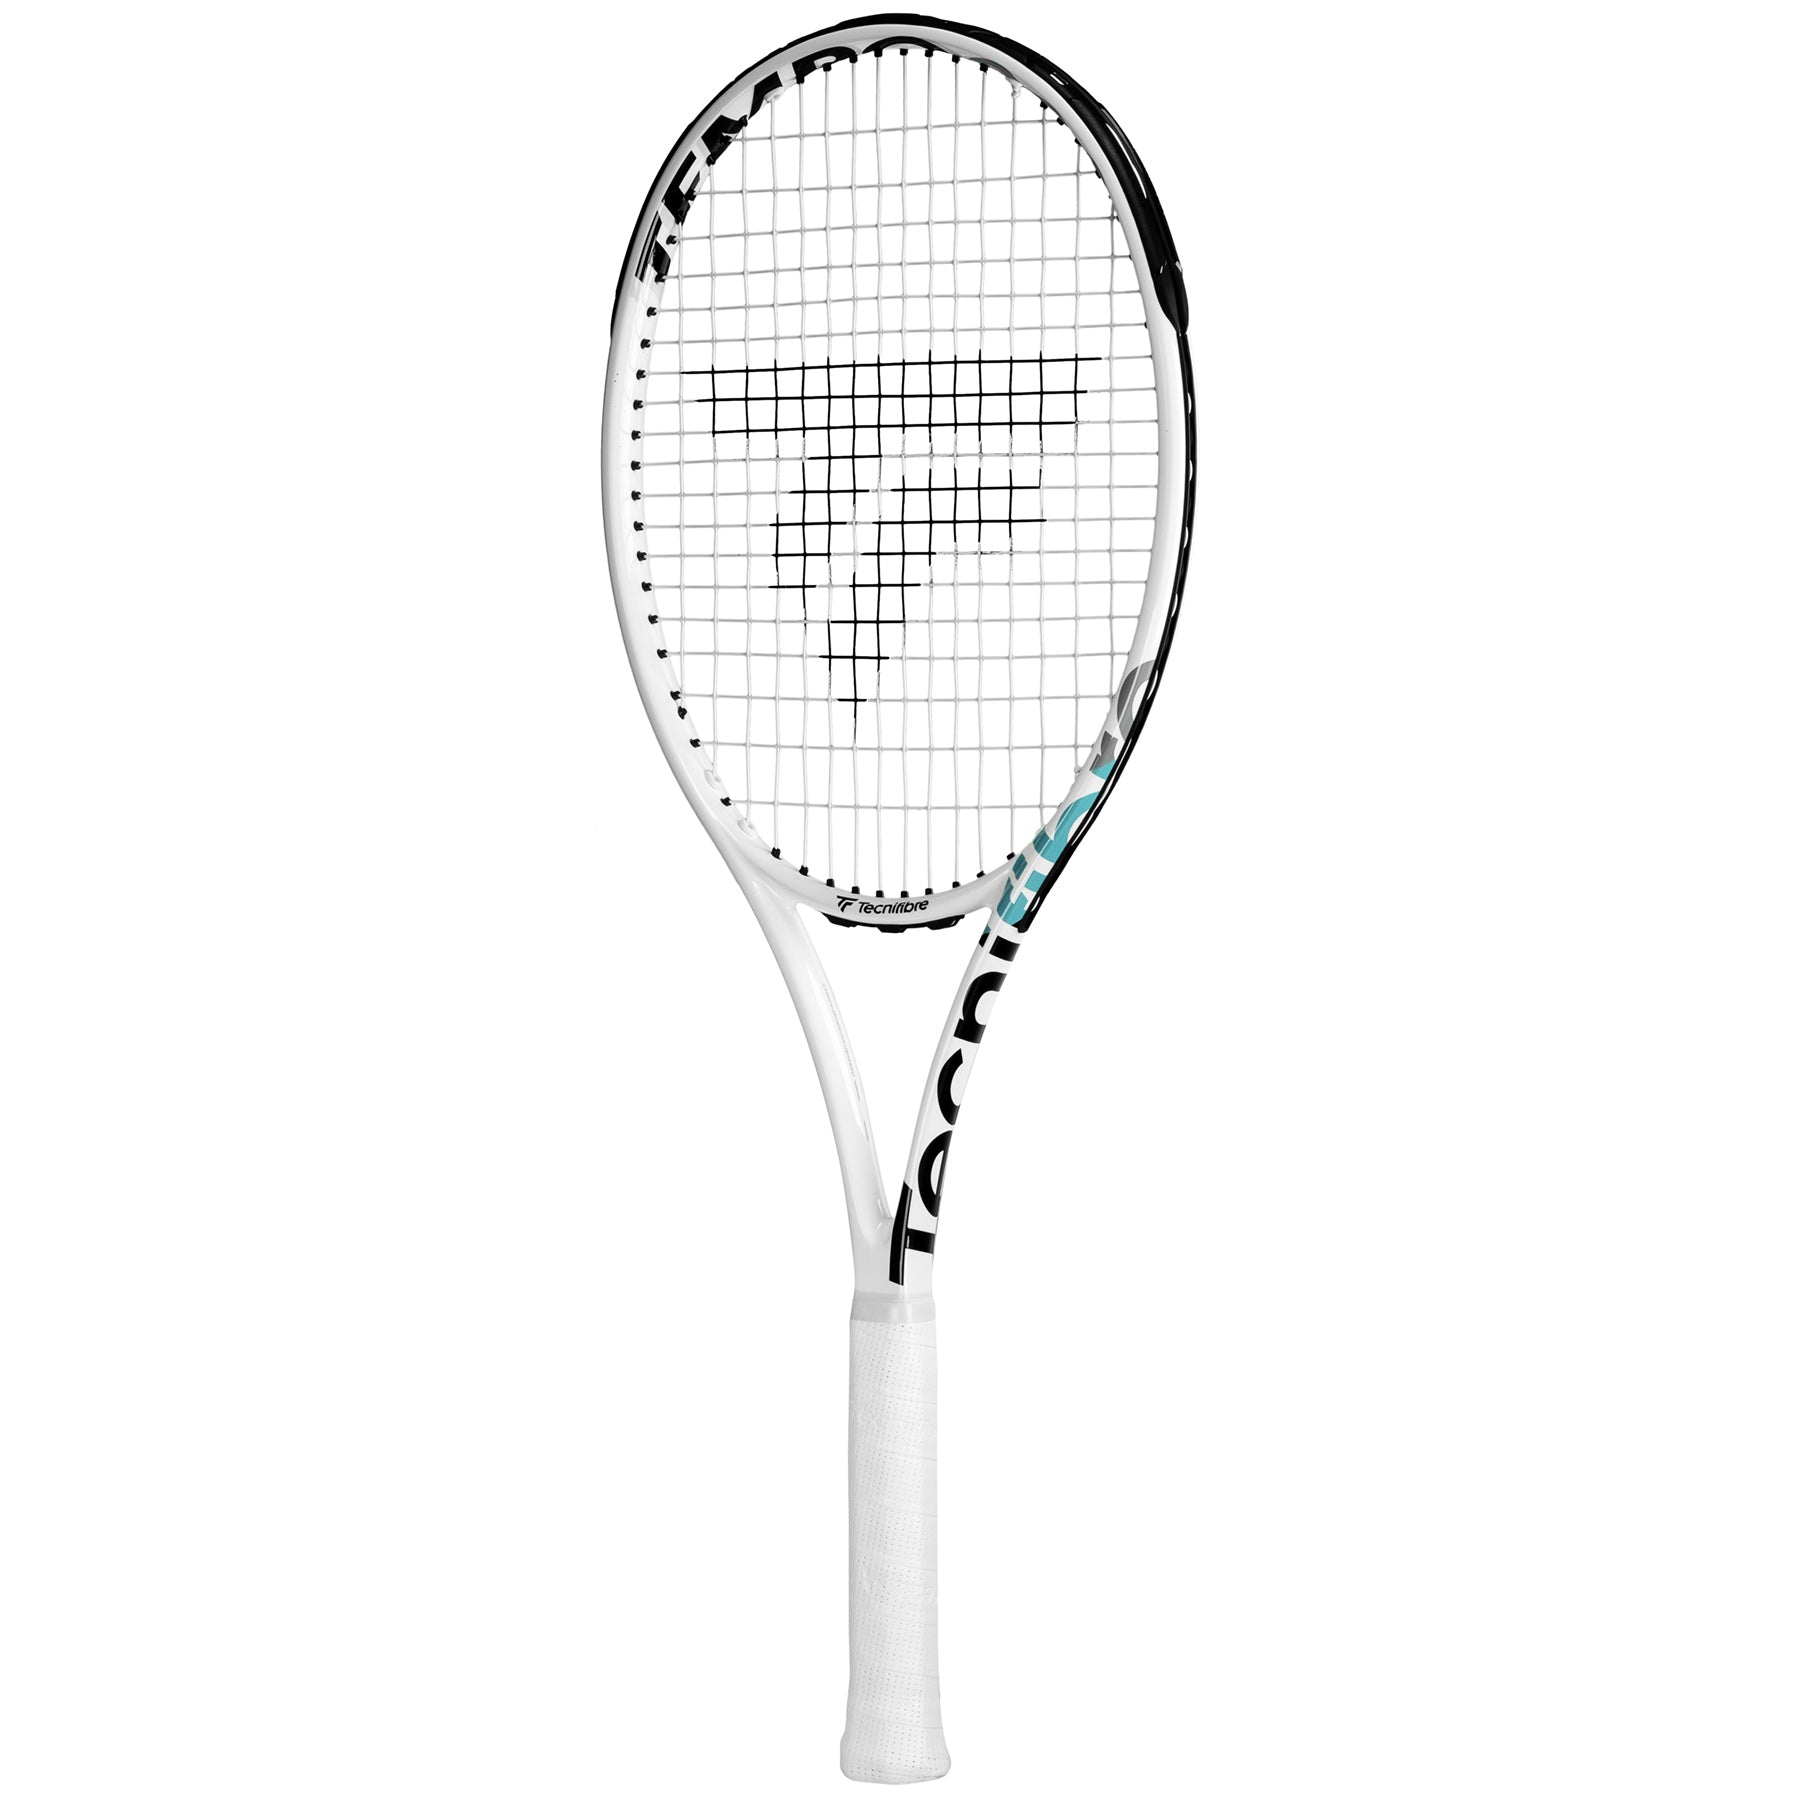 Tecnifibre Tempo 298 IGA Tennis Racket - The Professional&